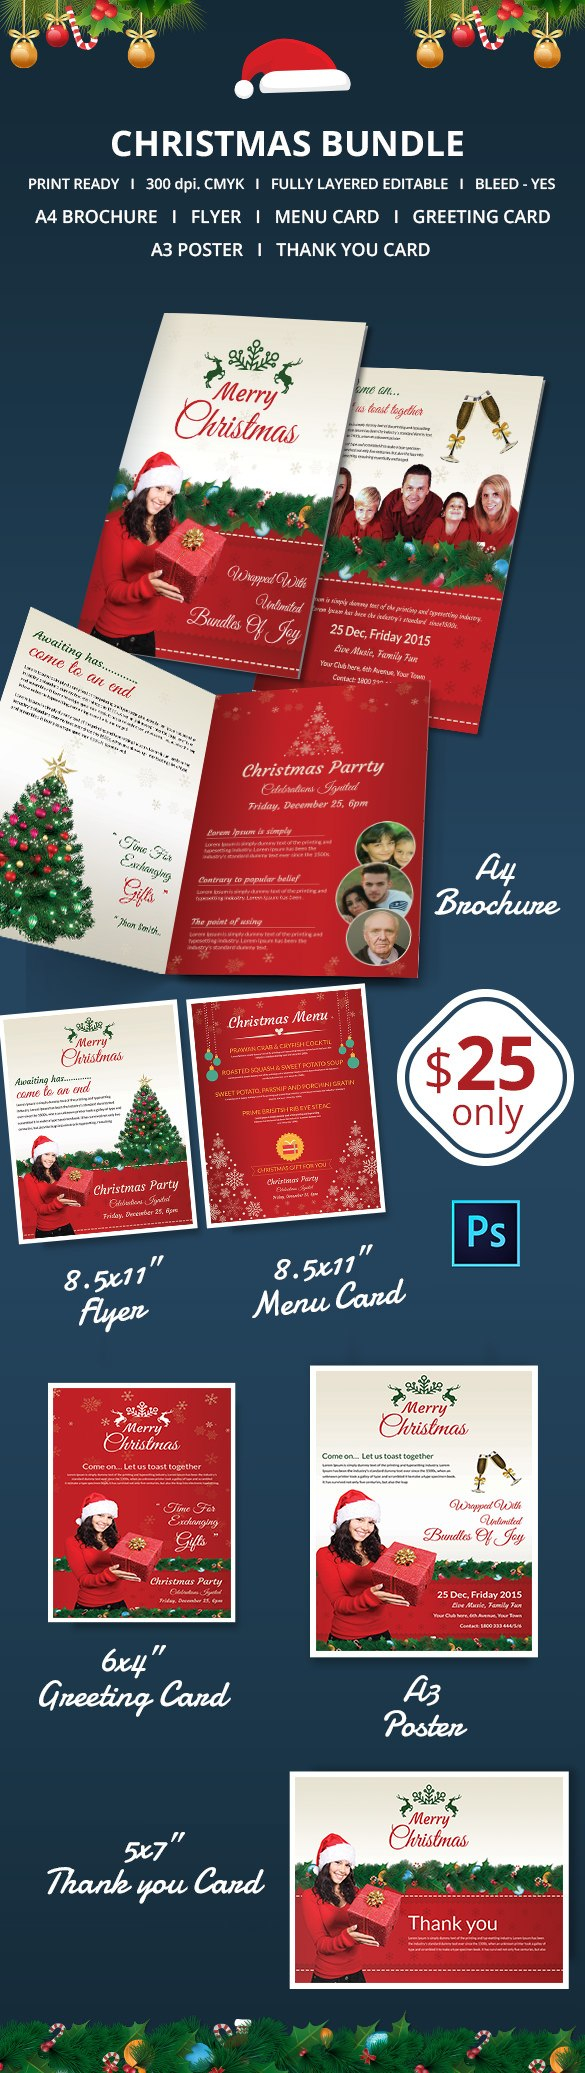 Christmas Brochures Templates  Psd Word Publisher Apple pertaining to Christmas Brochure Templates Free